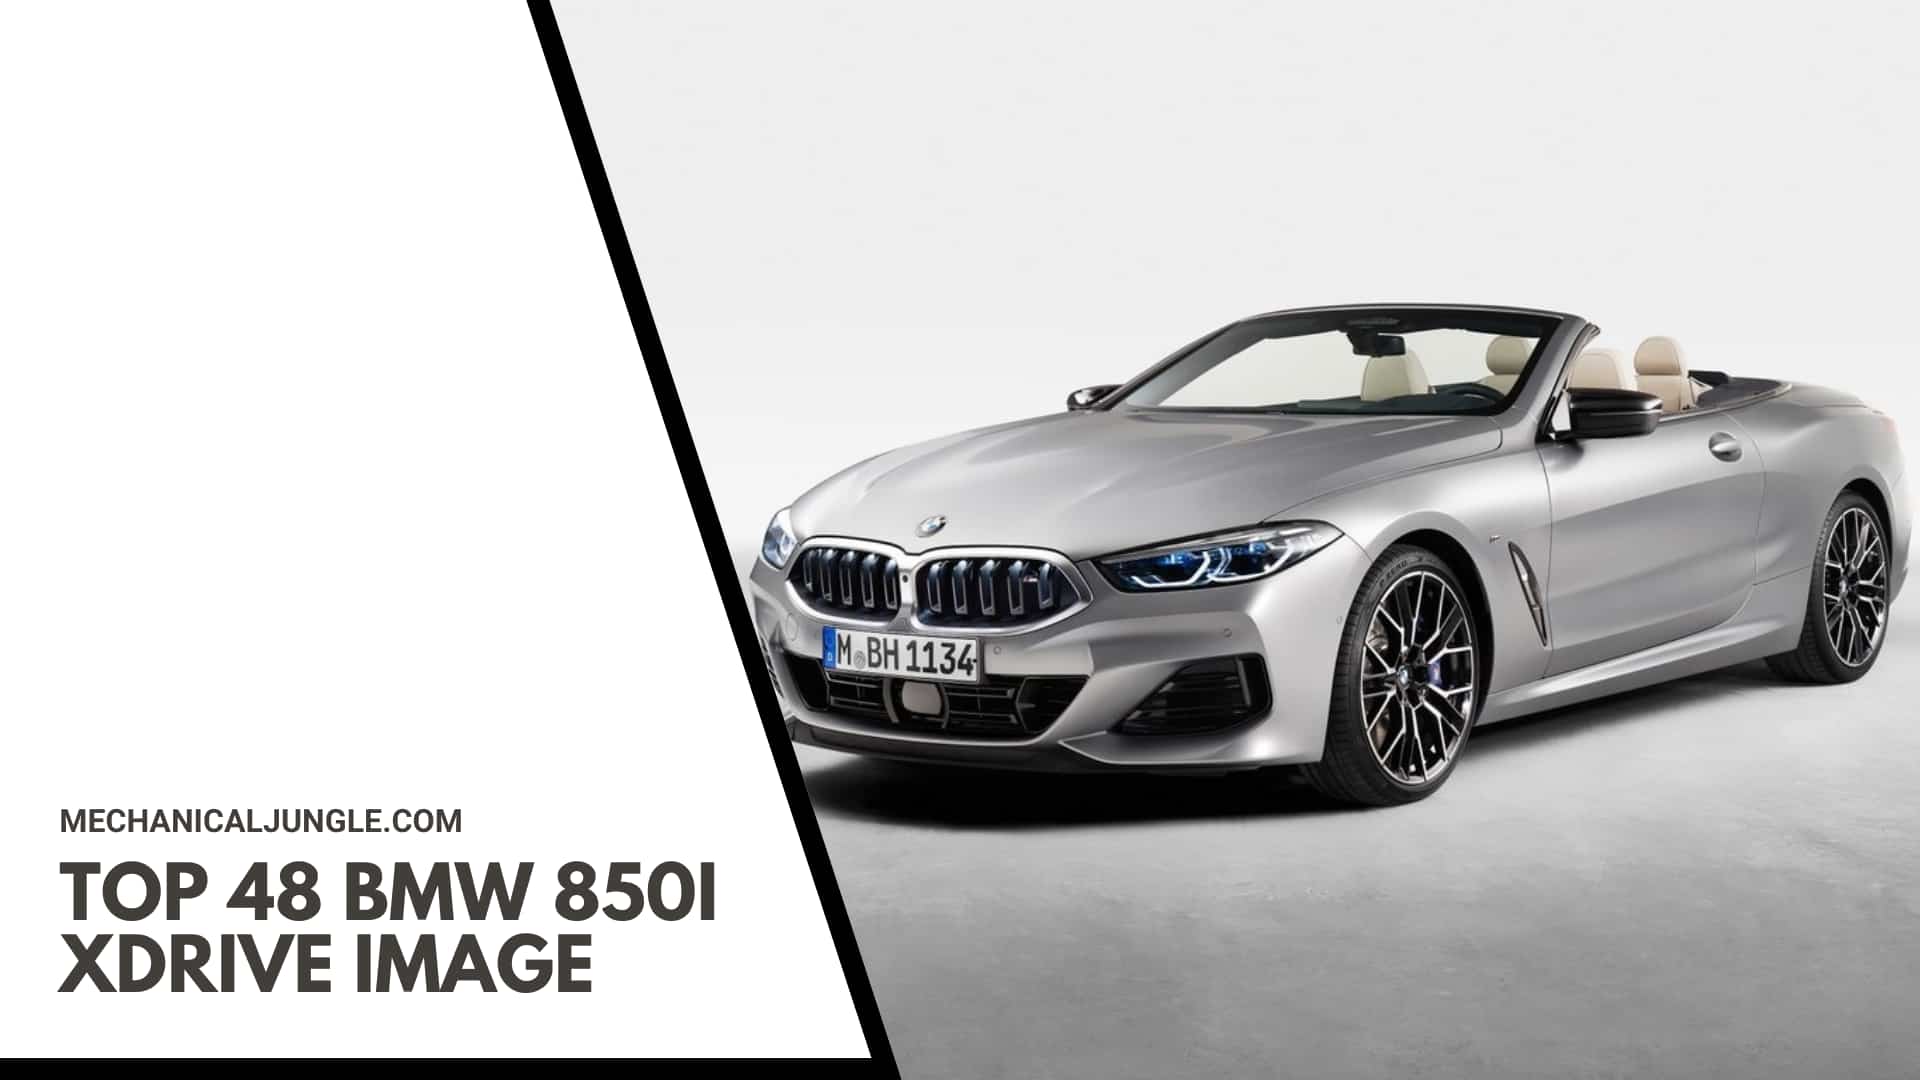 Top 48 BMW 850i xDrive Image